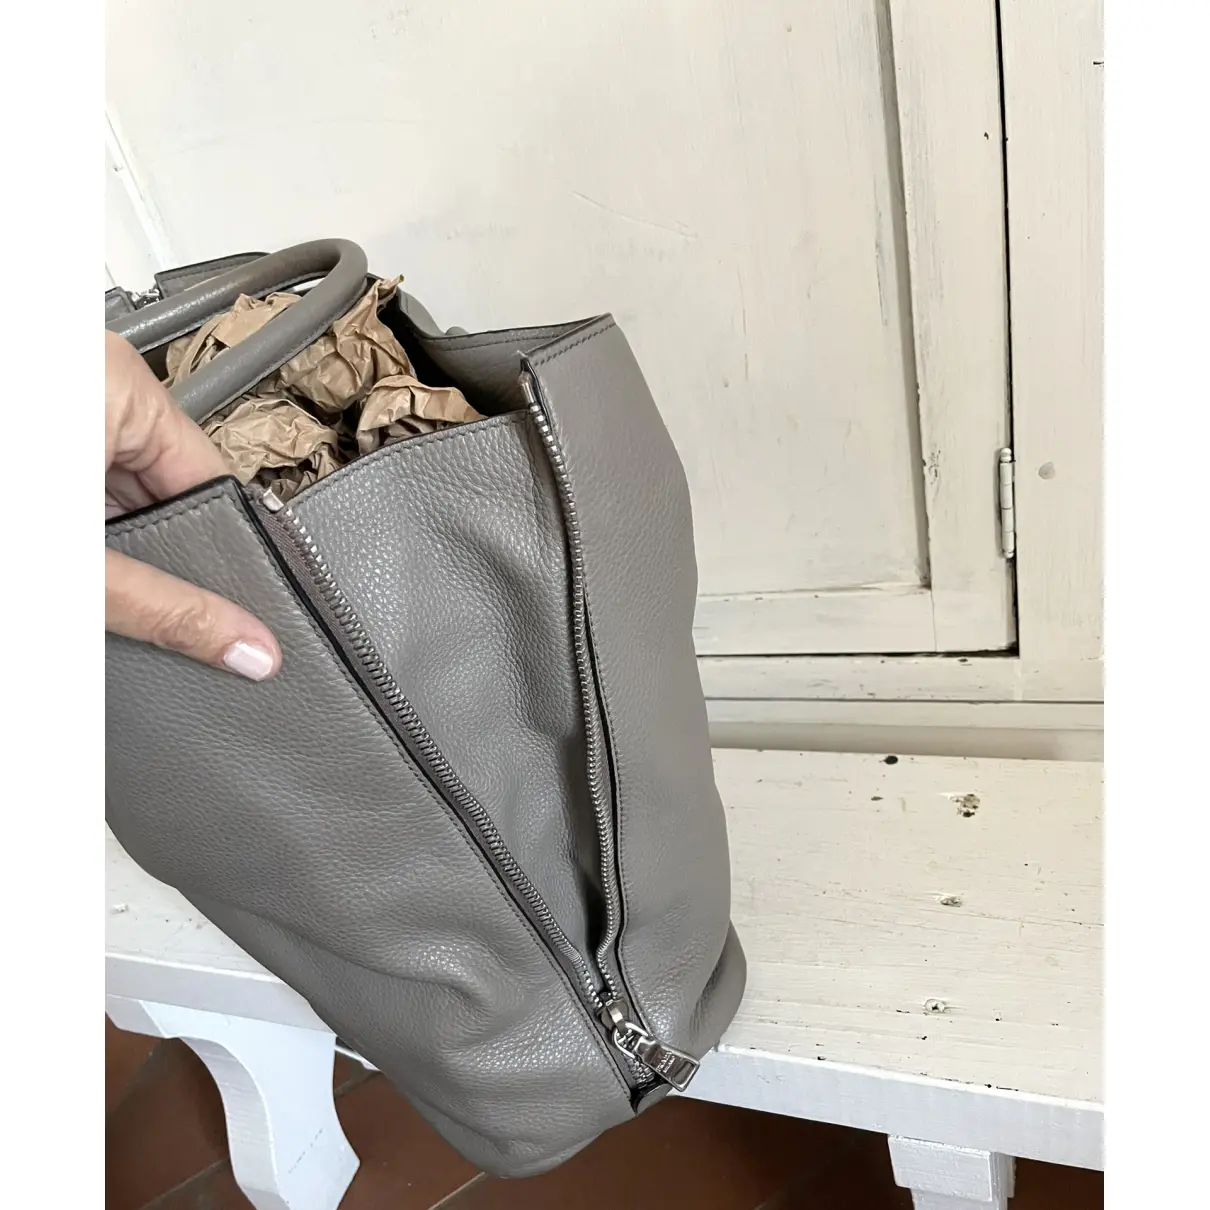 Monochrome leather handbag Prada